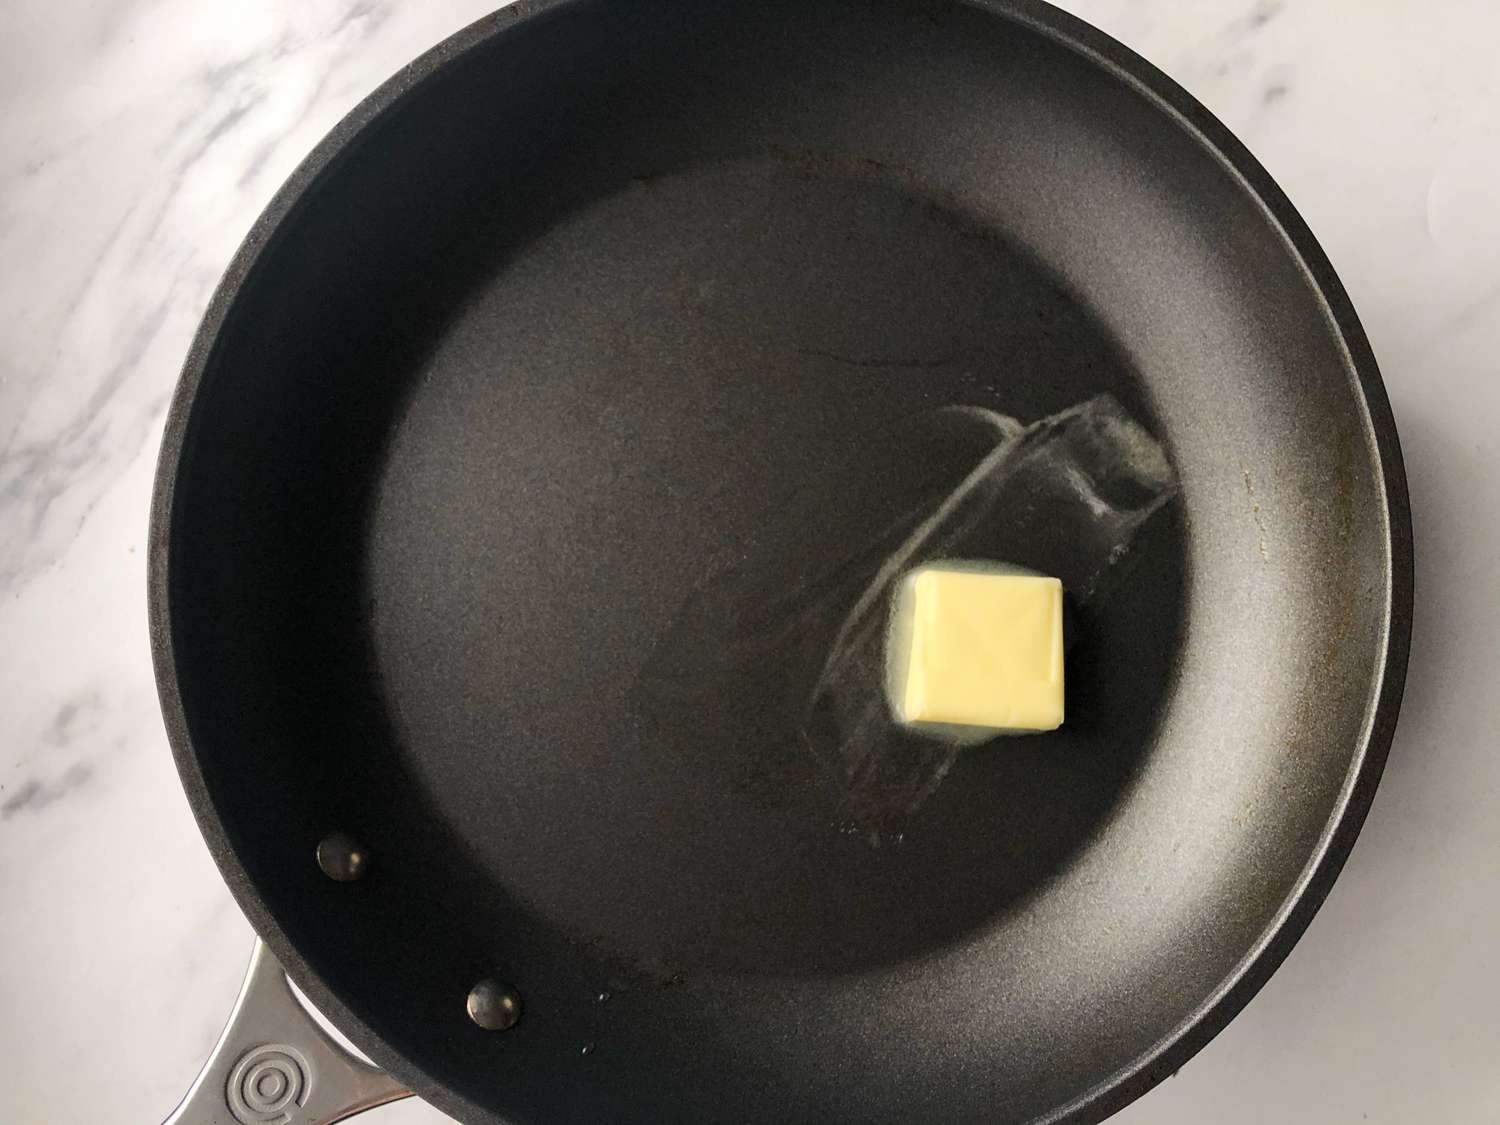 melting butter in nonstick pan